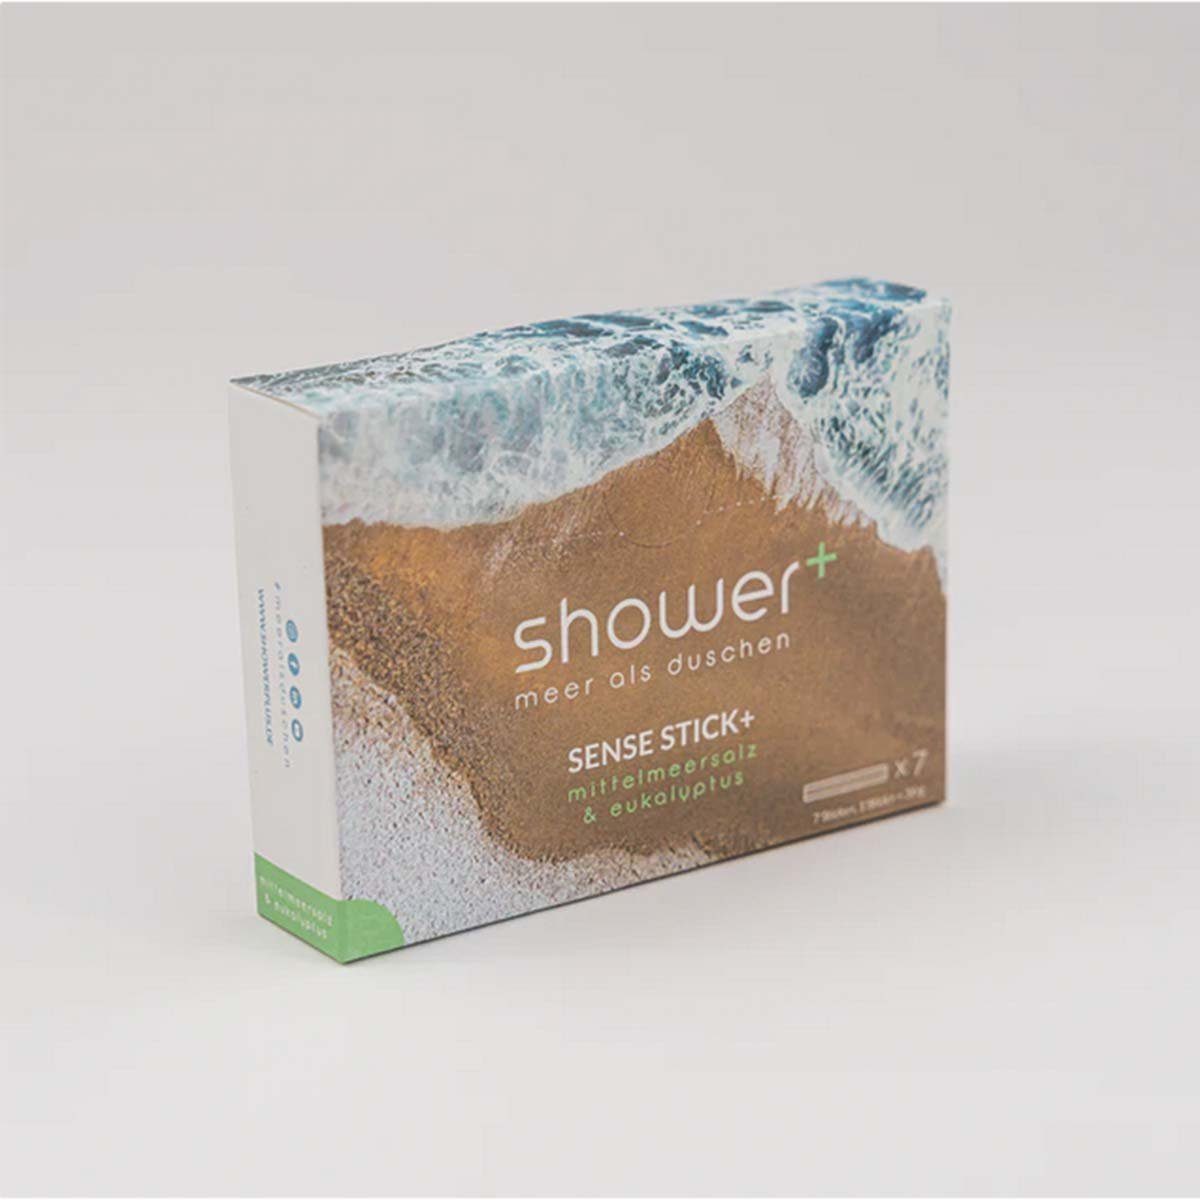 Shower+ Badesalz Sense Stick+ & Eukalyptus Mittelmeersalz